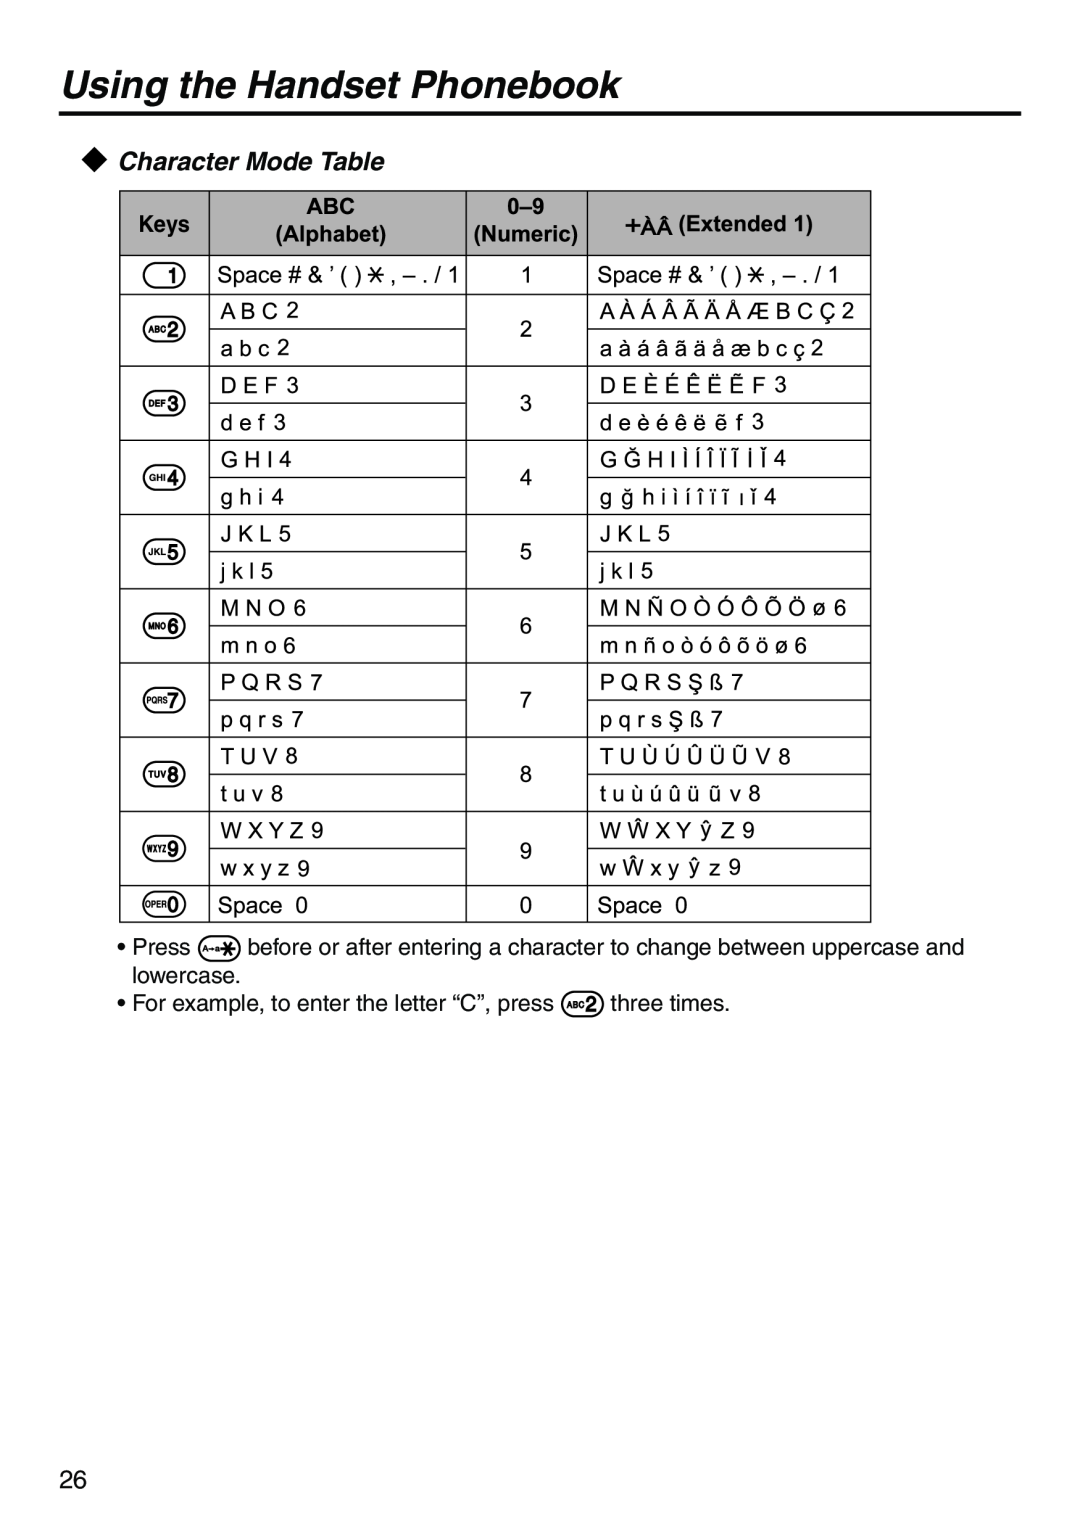 Panasonic KX-TDA100 manual Character Mode Table, Using the Handset Phonebook 